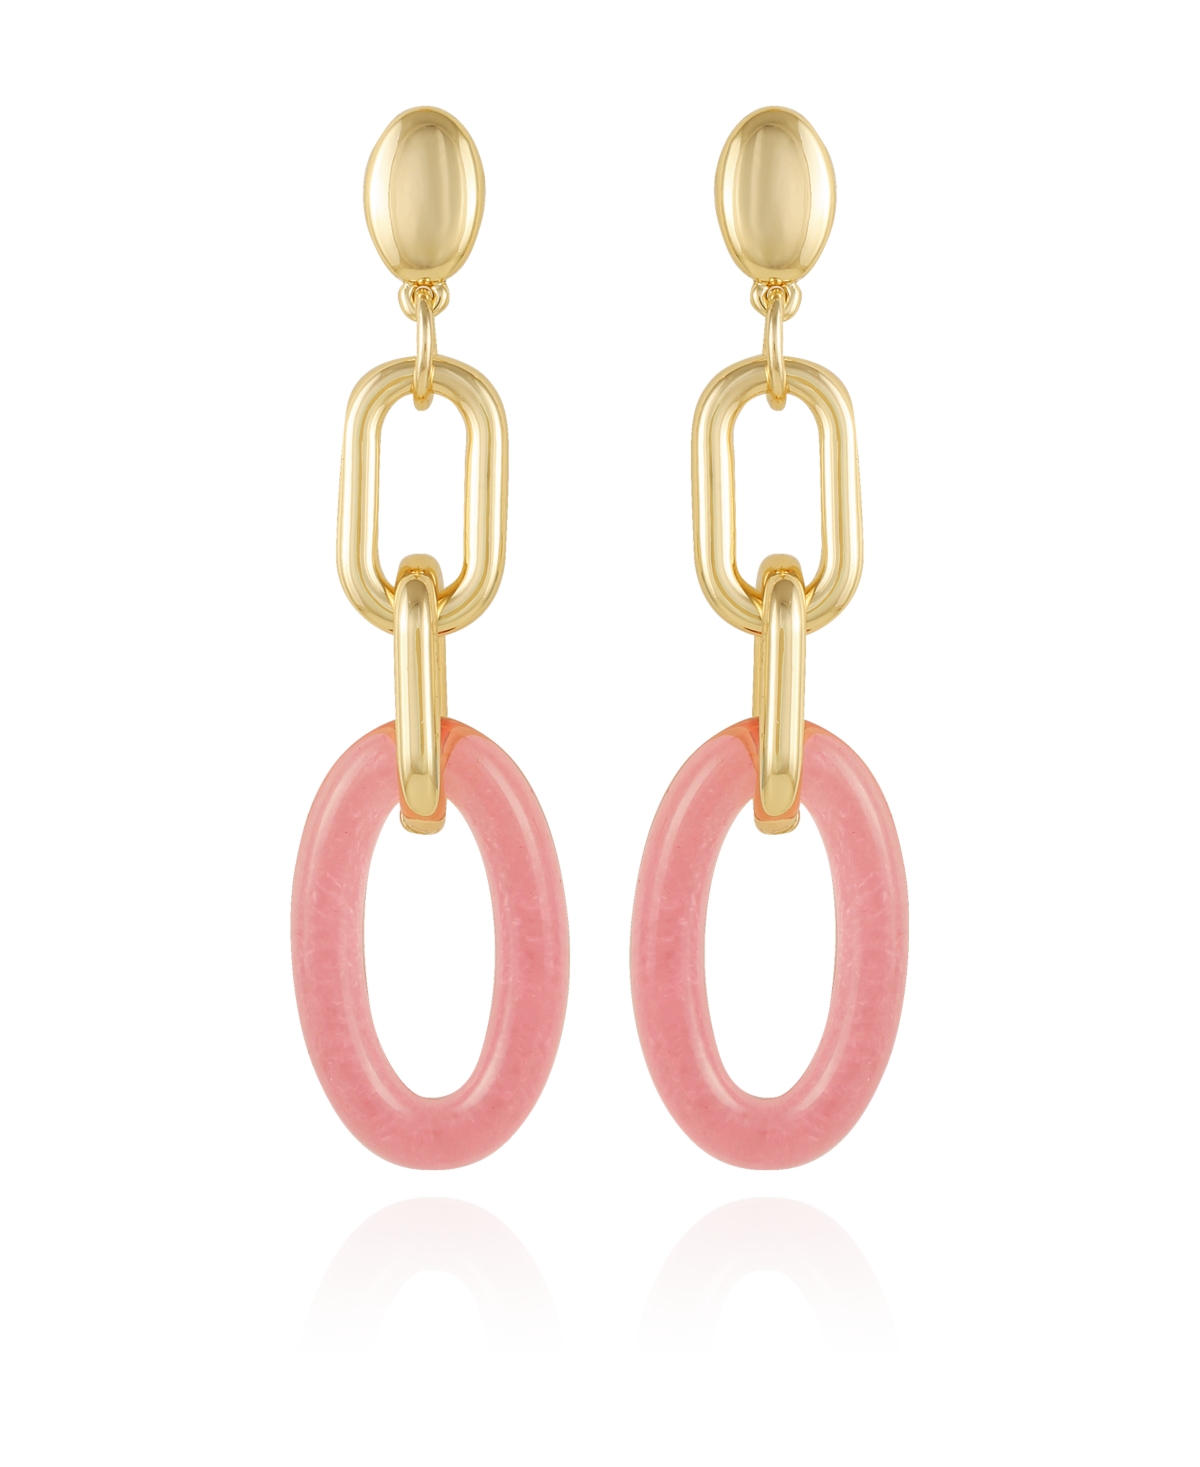 Rock Candy Linear Earrings - Gold-Tone, Pink